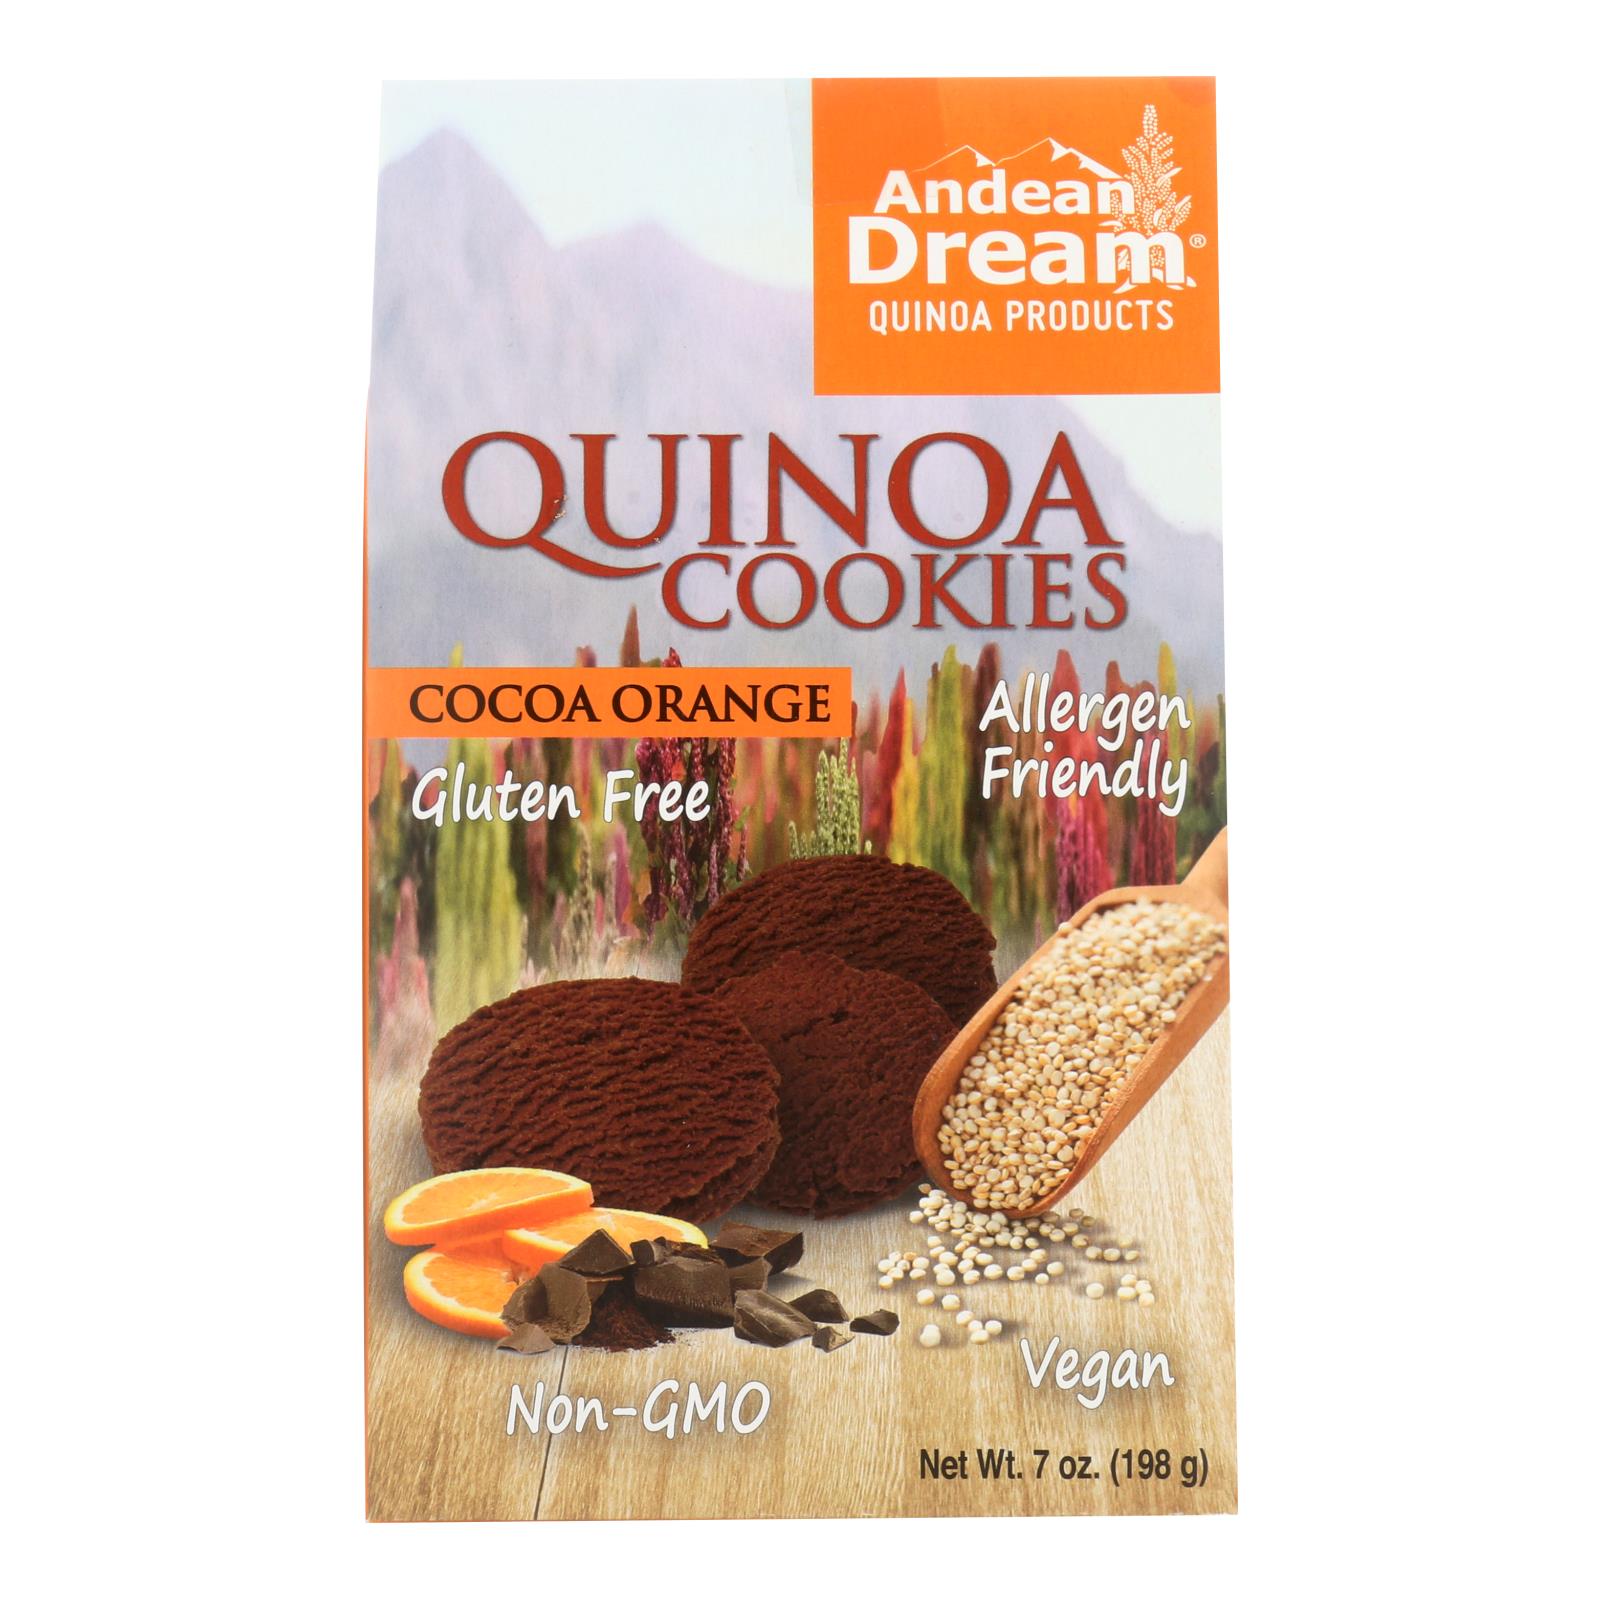 Andean Dream, Andean Dream Gluten Free Quinoa Cookies Cocoa Orange - Case of 6 - 7 oz. (Pack of 6)